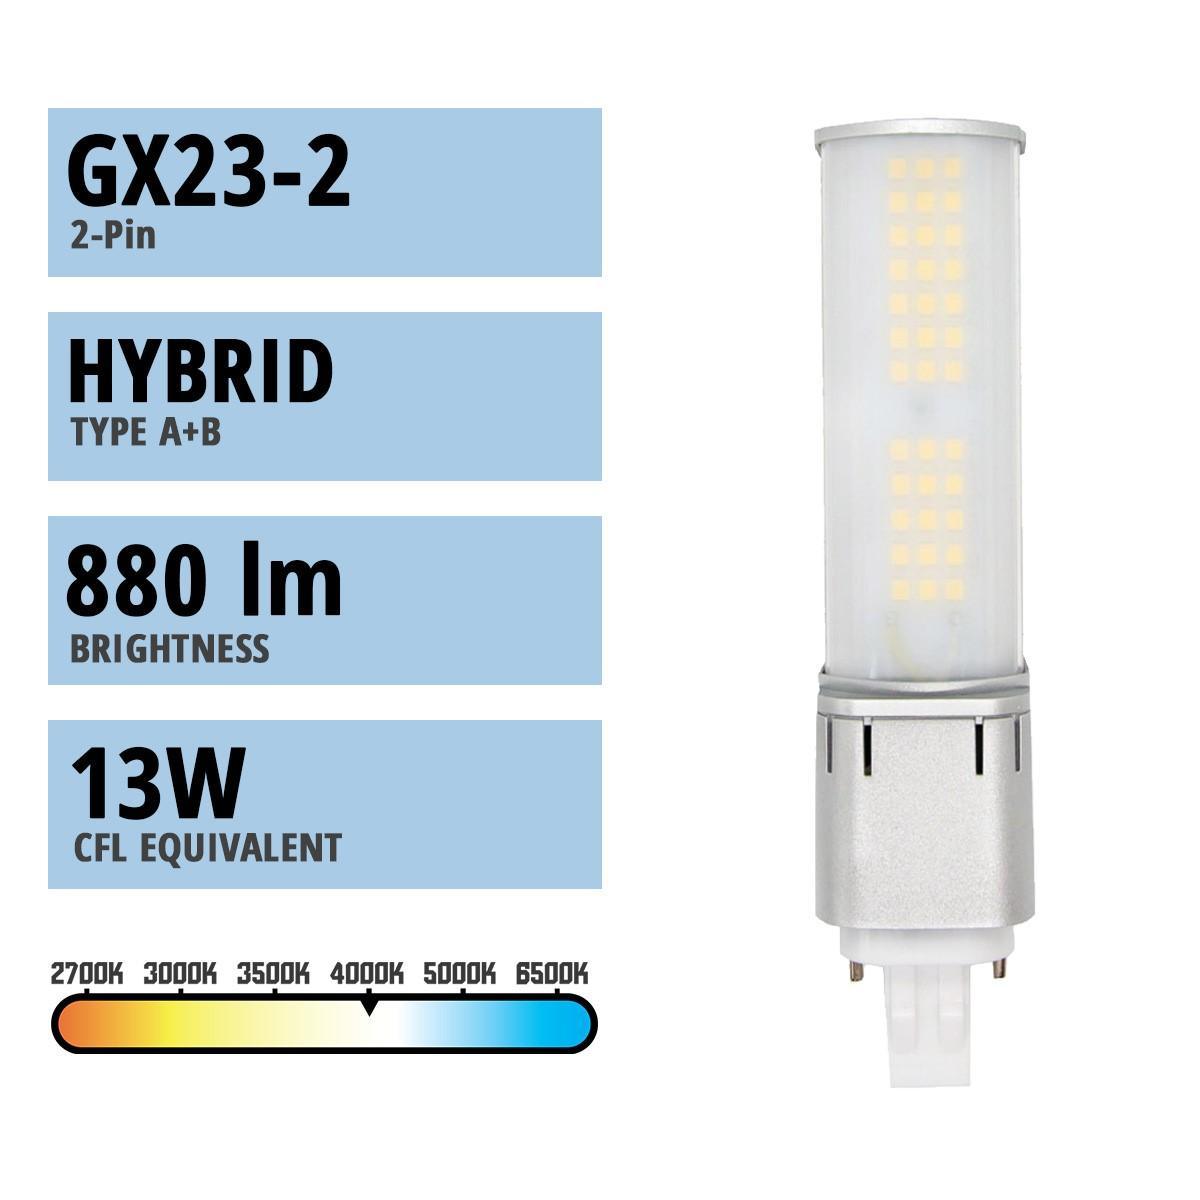 LED lamps with retrofit pin base G9